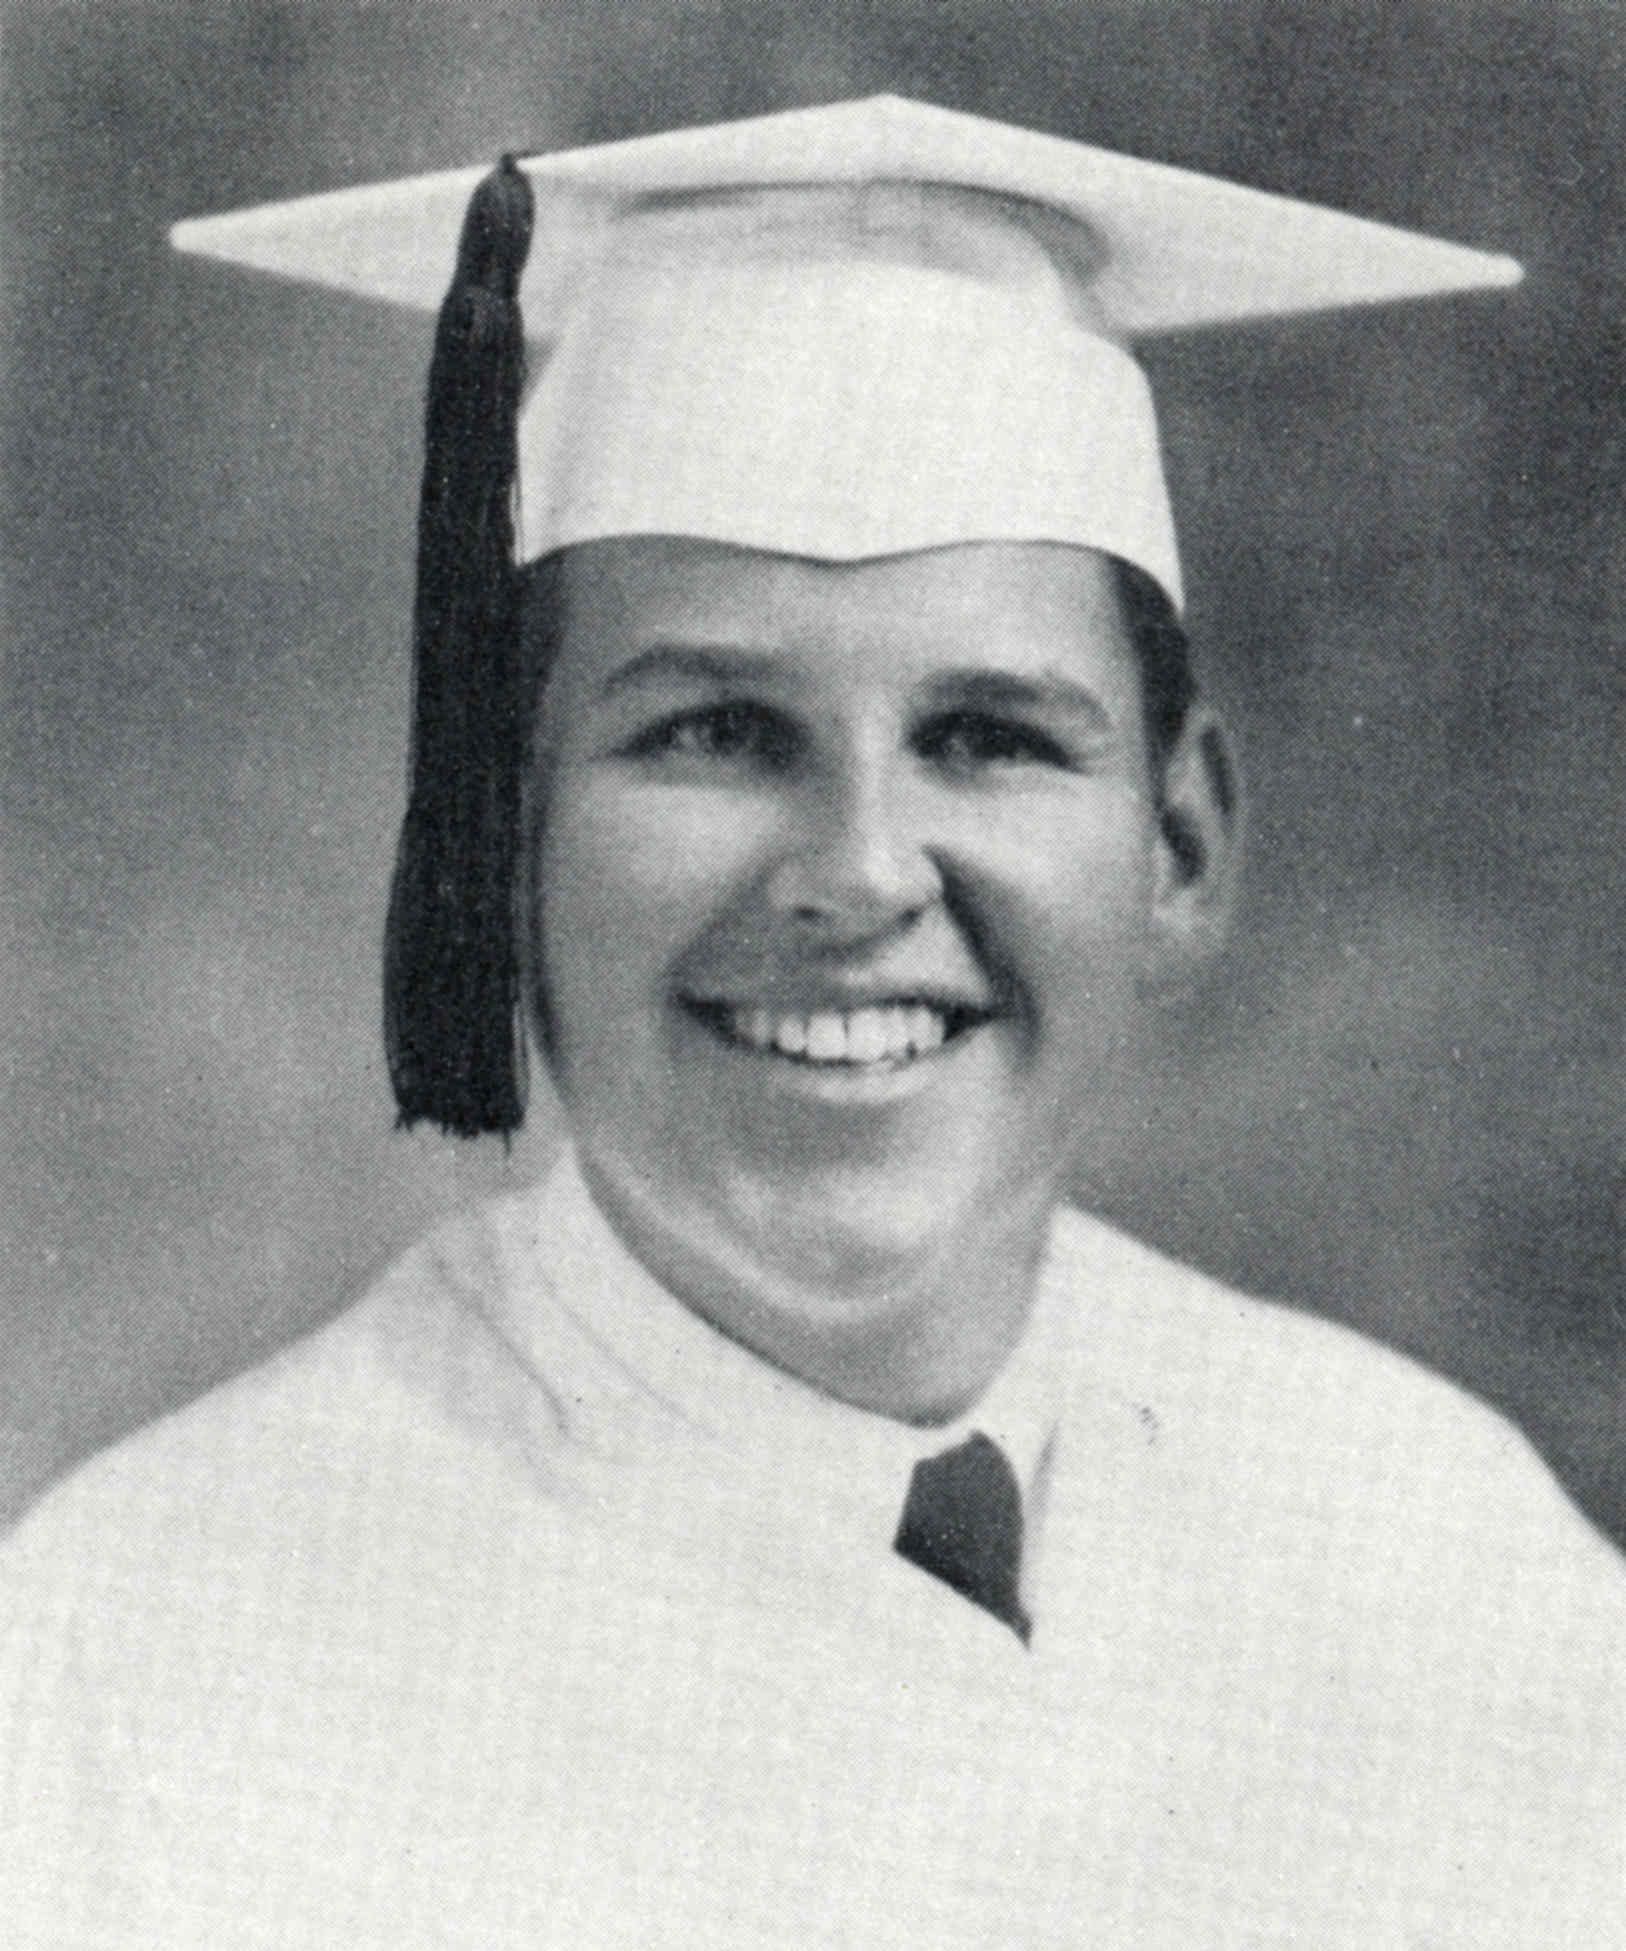 Paul Lynde 1944 graduation photo